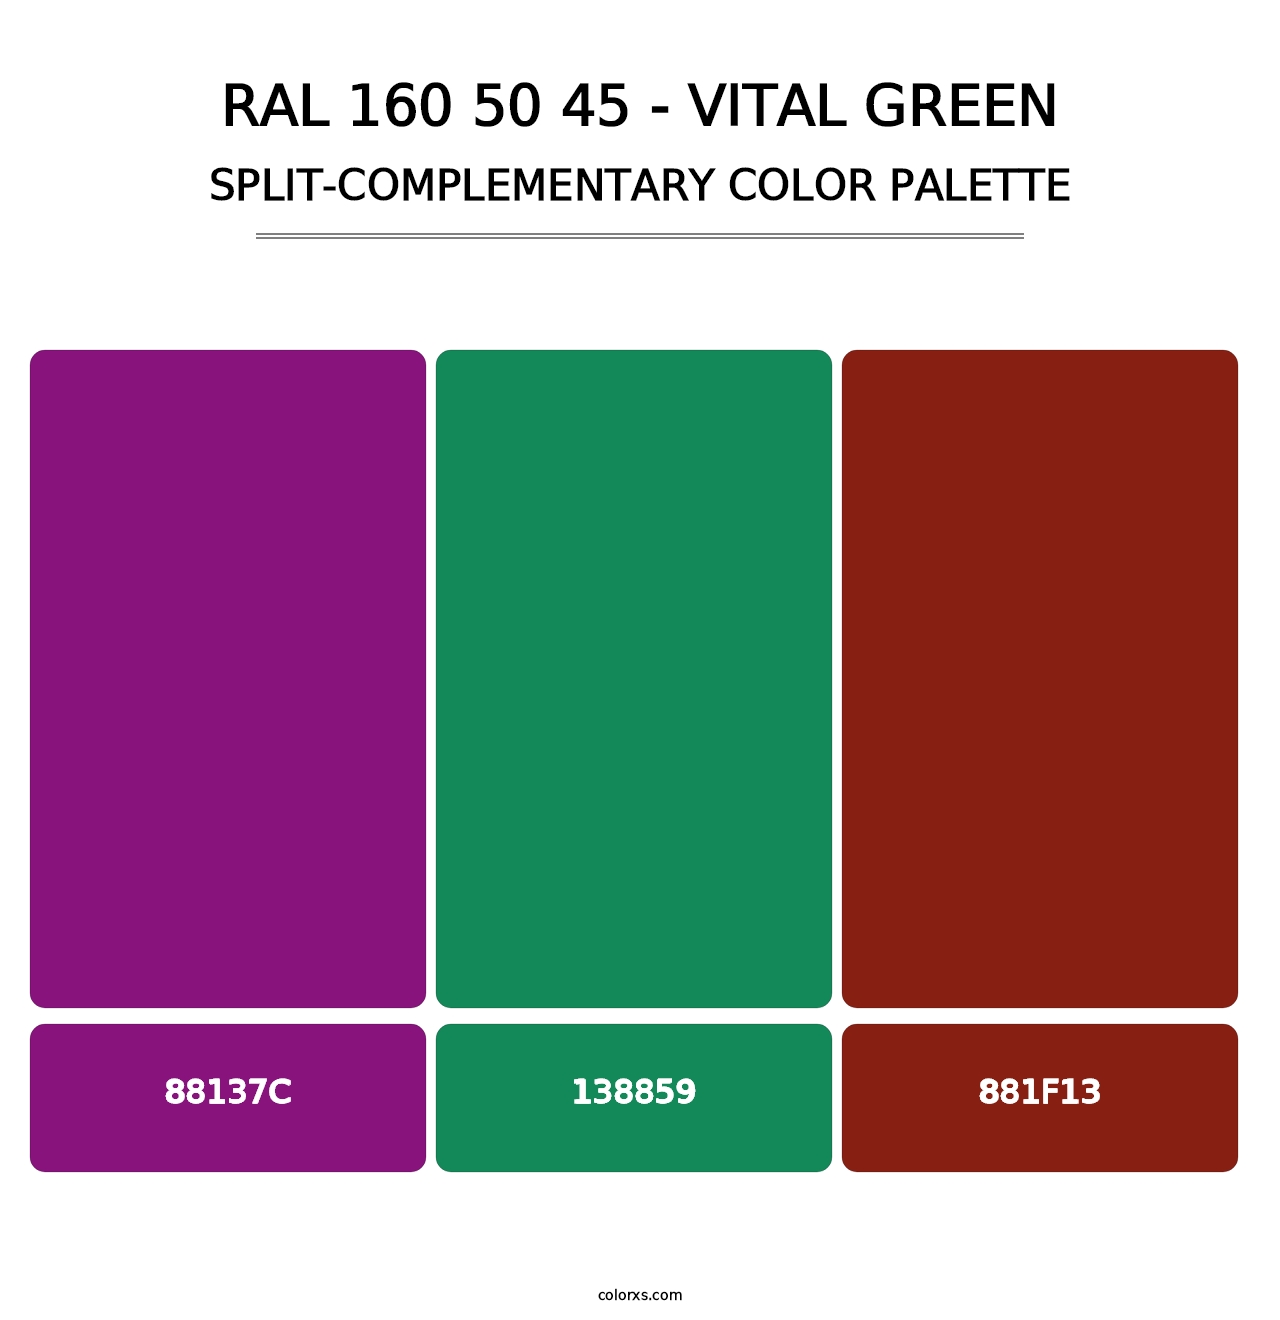 RAL 160 50 45 - Vital Green - Split-Complementary Color Palette